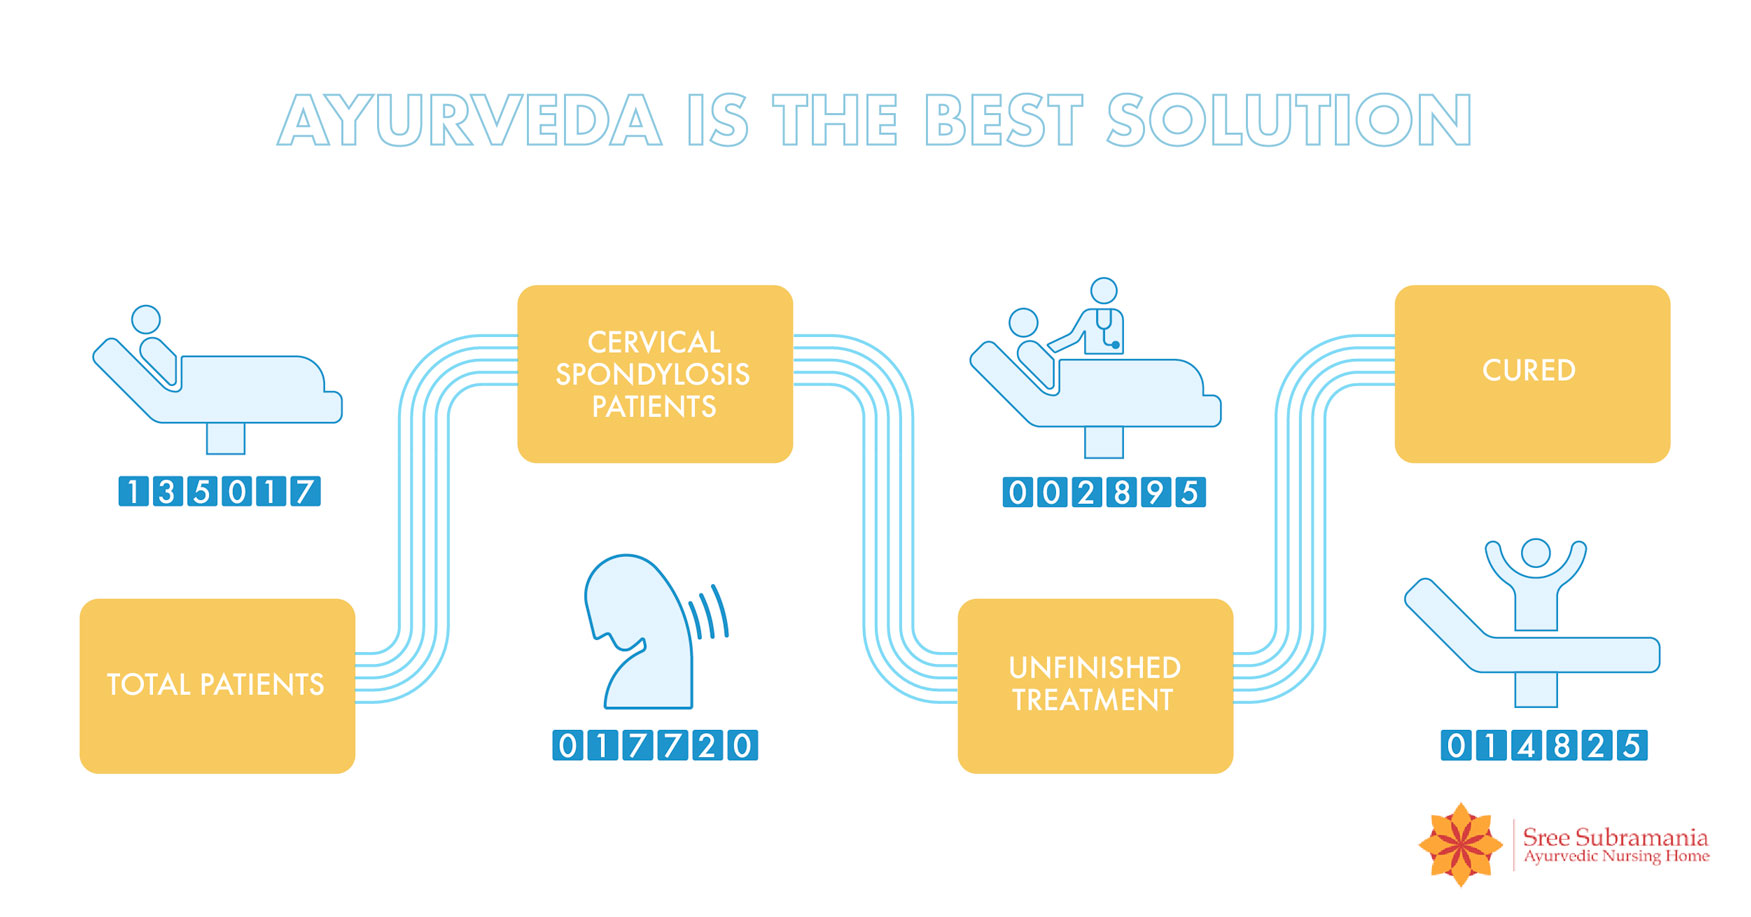 Cervical Spondylosis treatment results at Sree Subramania ayurvedic nursing home